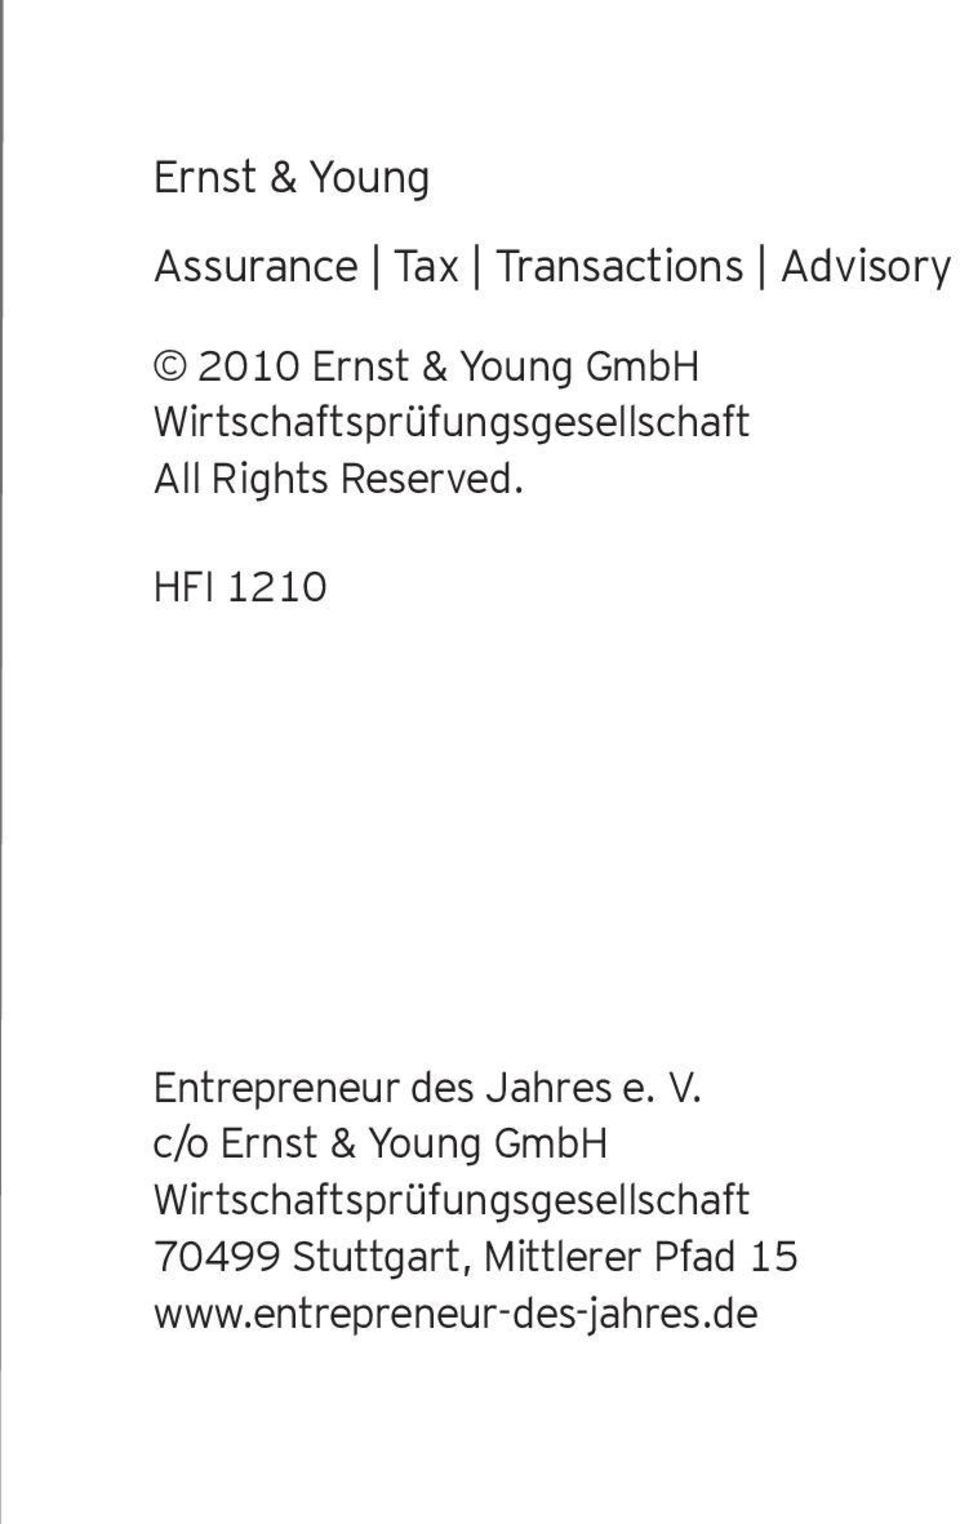 HFI 1210 Entrepreneur des Jahres e. V.